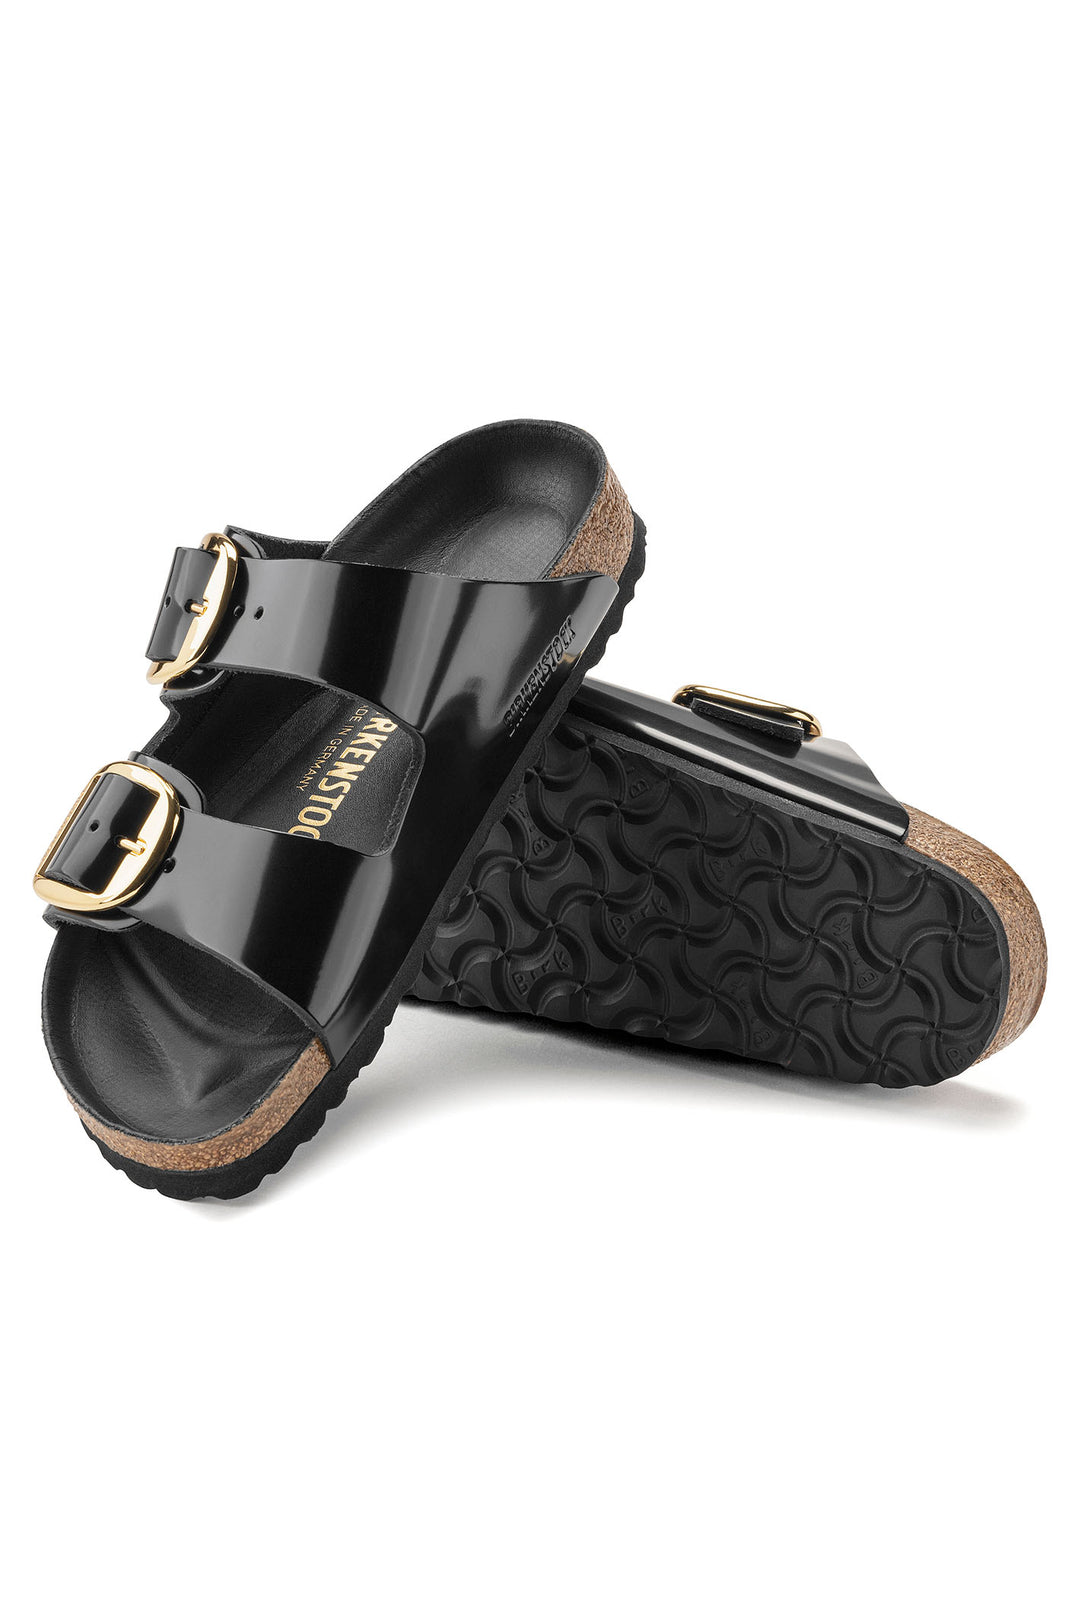 Birkenstock Arizona 1021476 Big Buckle Black Patent Leather Narrow Fit Sandal - Shirley Allum Boutique